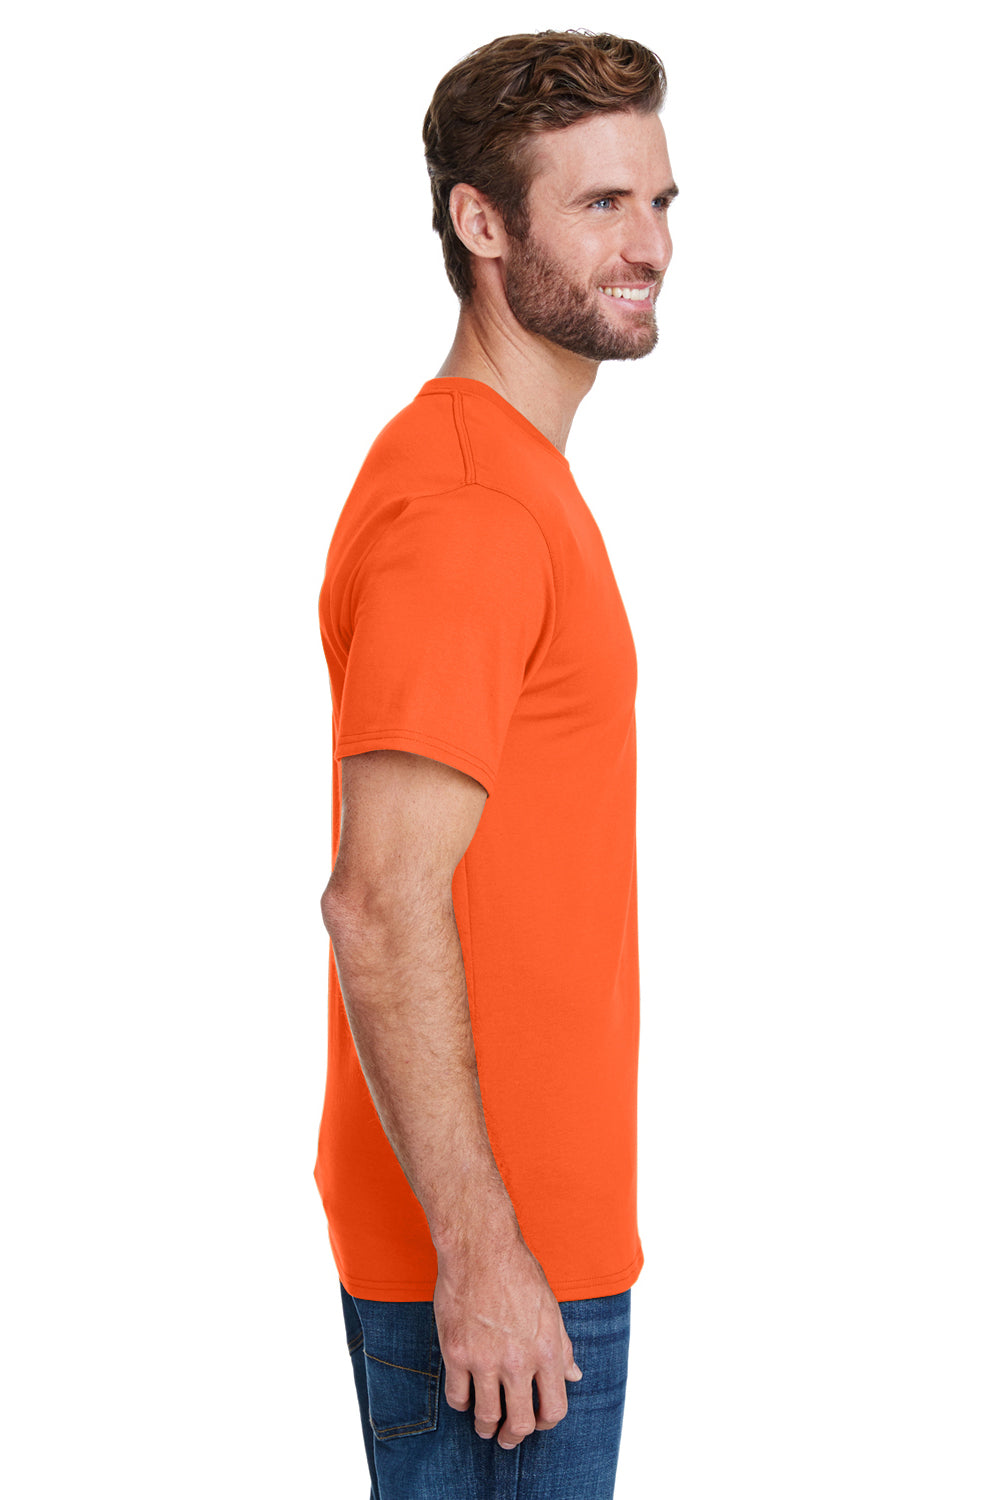 Hanes W110 Mens Workwear Short Sleeve Crewneck T-Shirt w/ Pocket Safety Orange Side